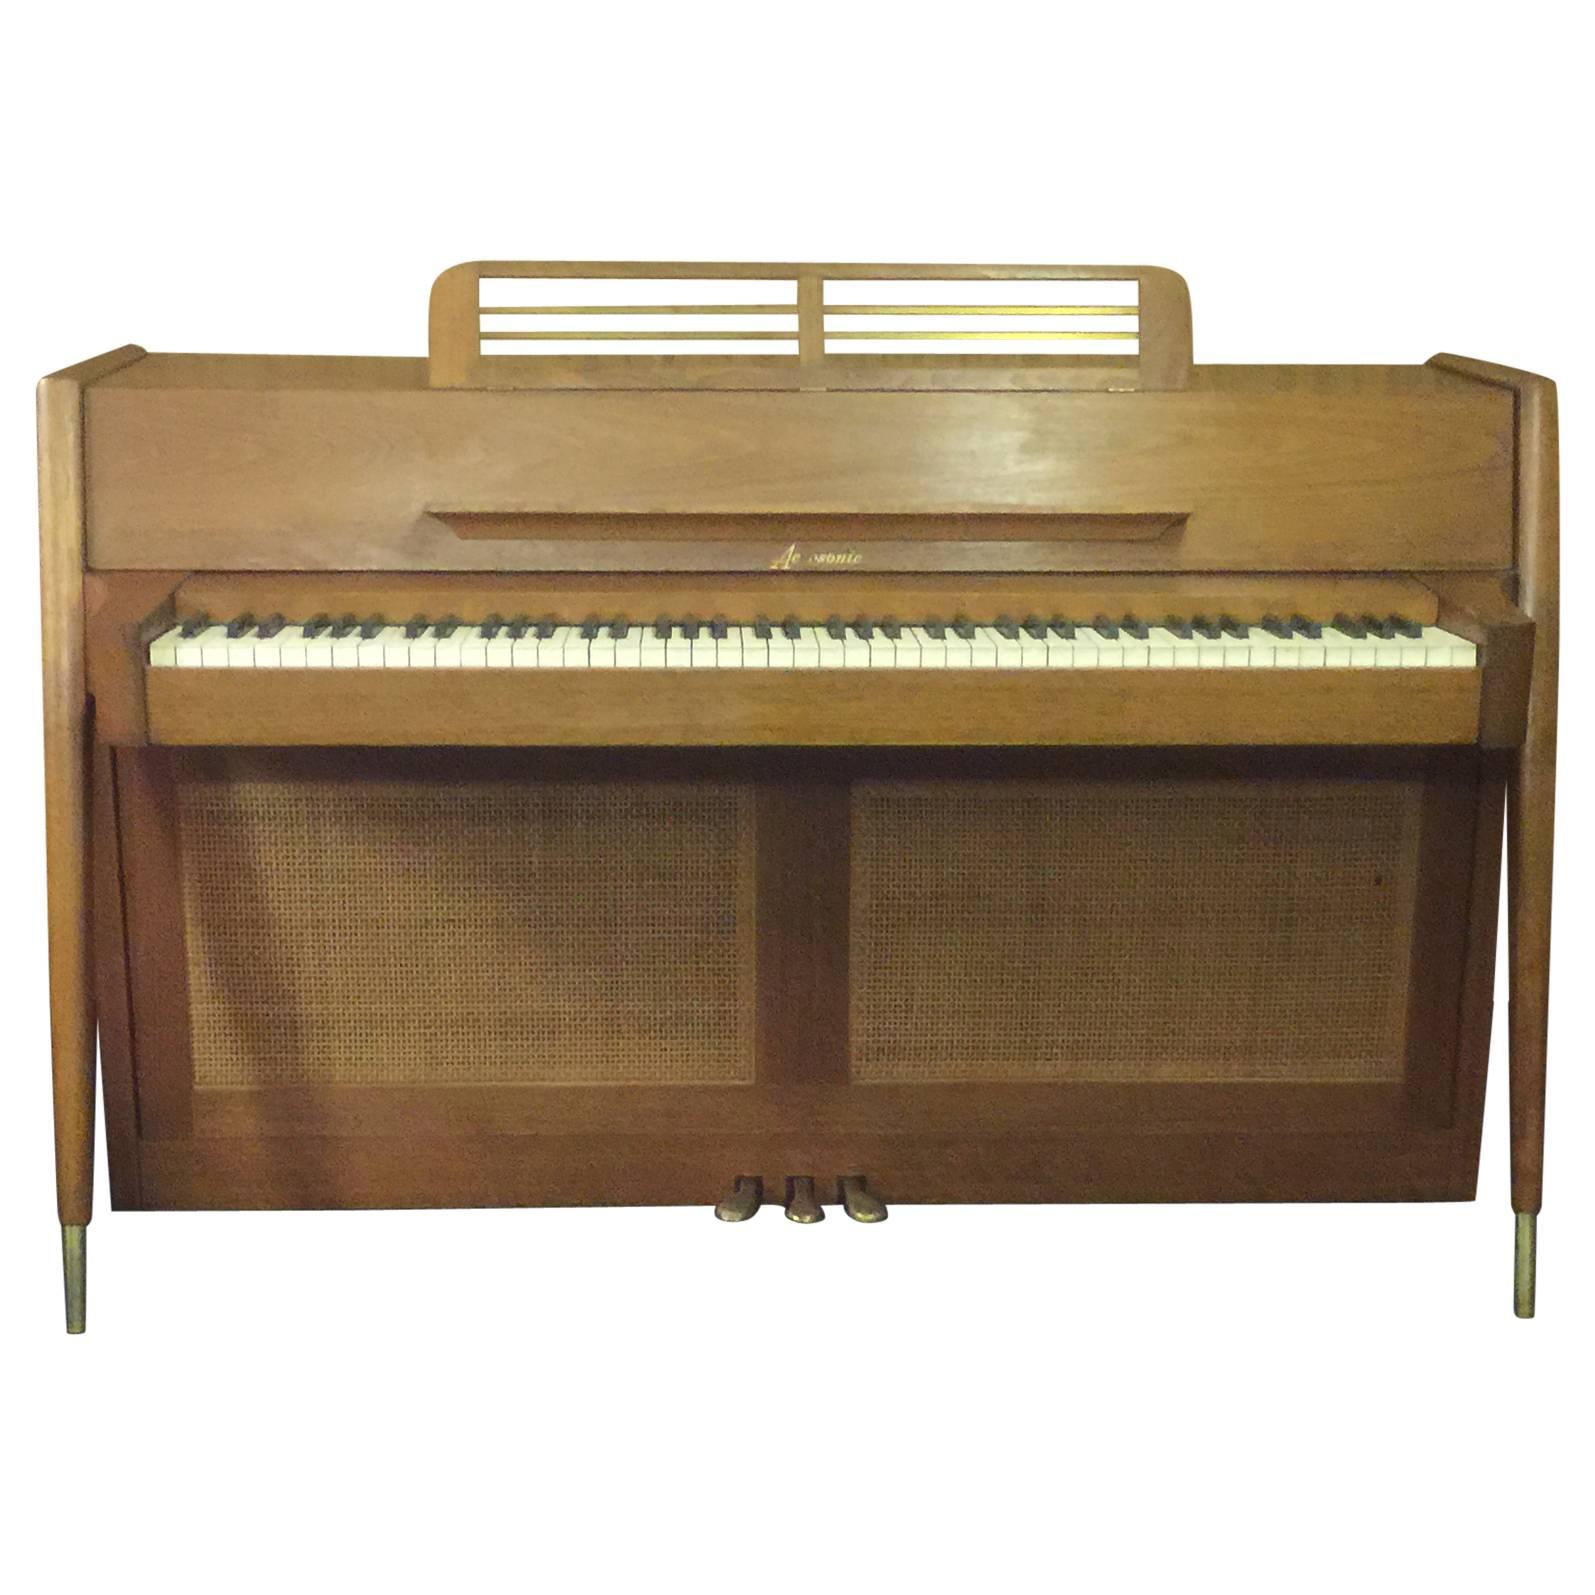 Arcosonic Spinet Piano by Baldwin Mid-Century Modern